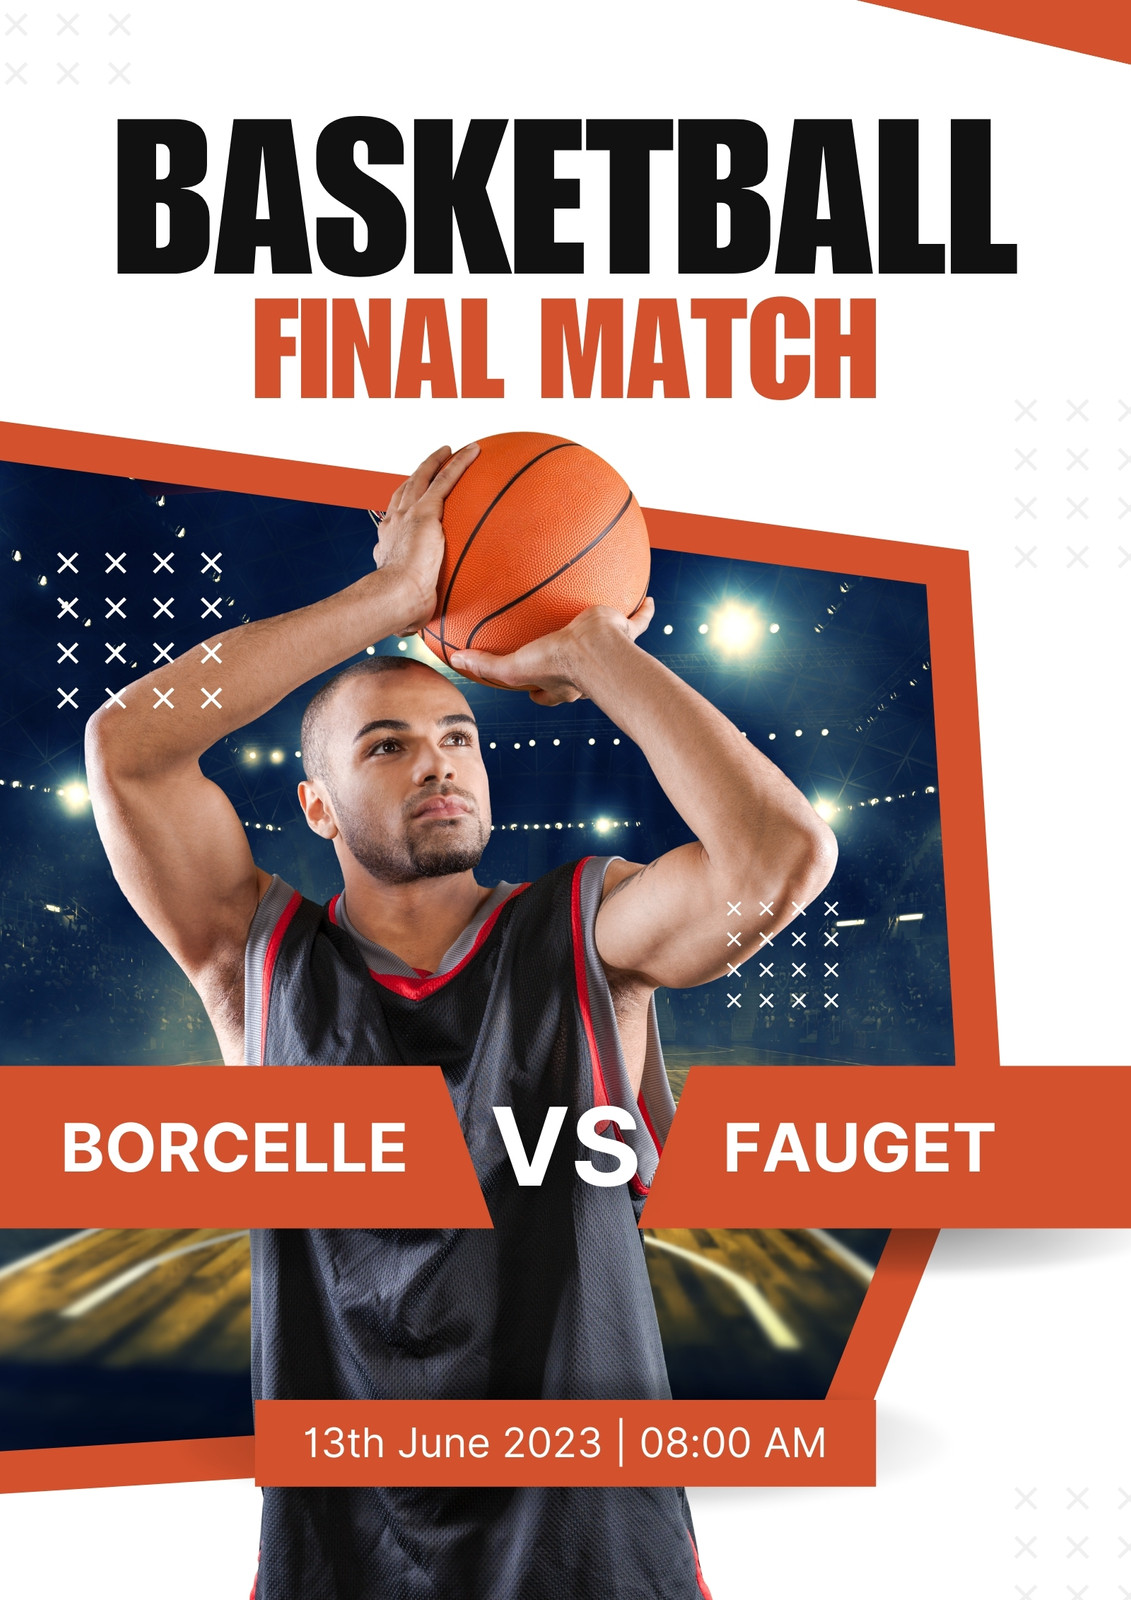 Customize 114+ Basketball Poster Templates Online - Canva